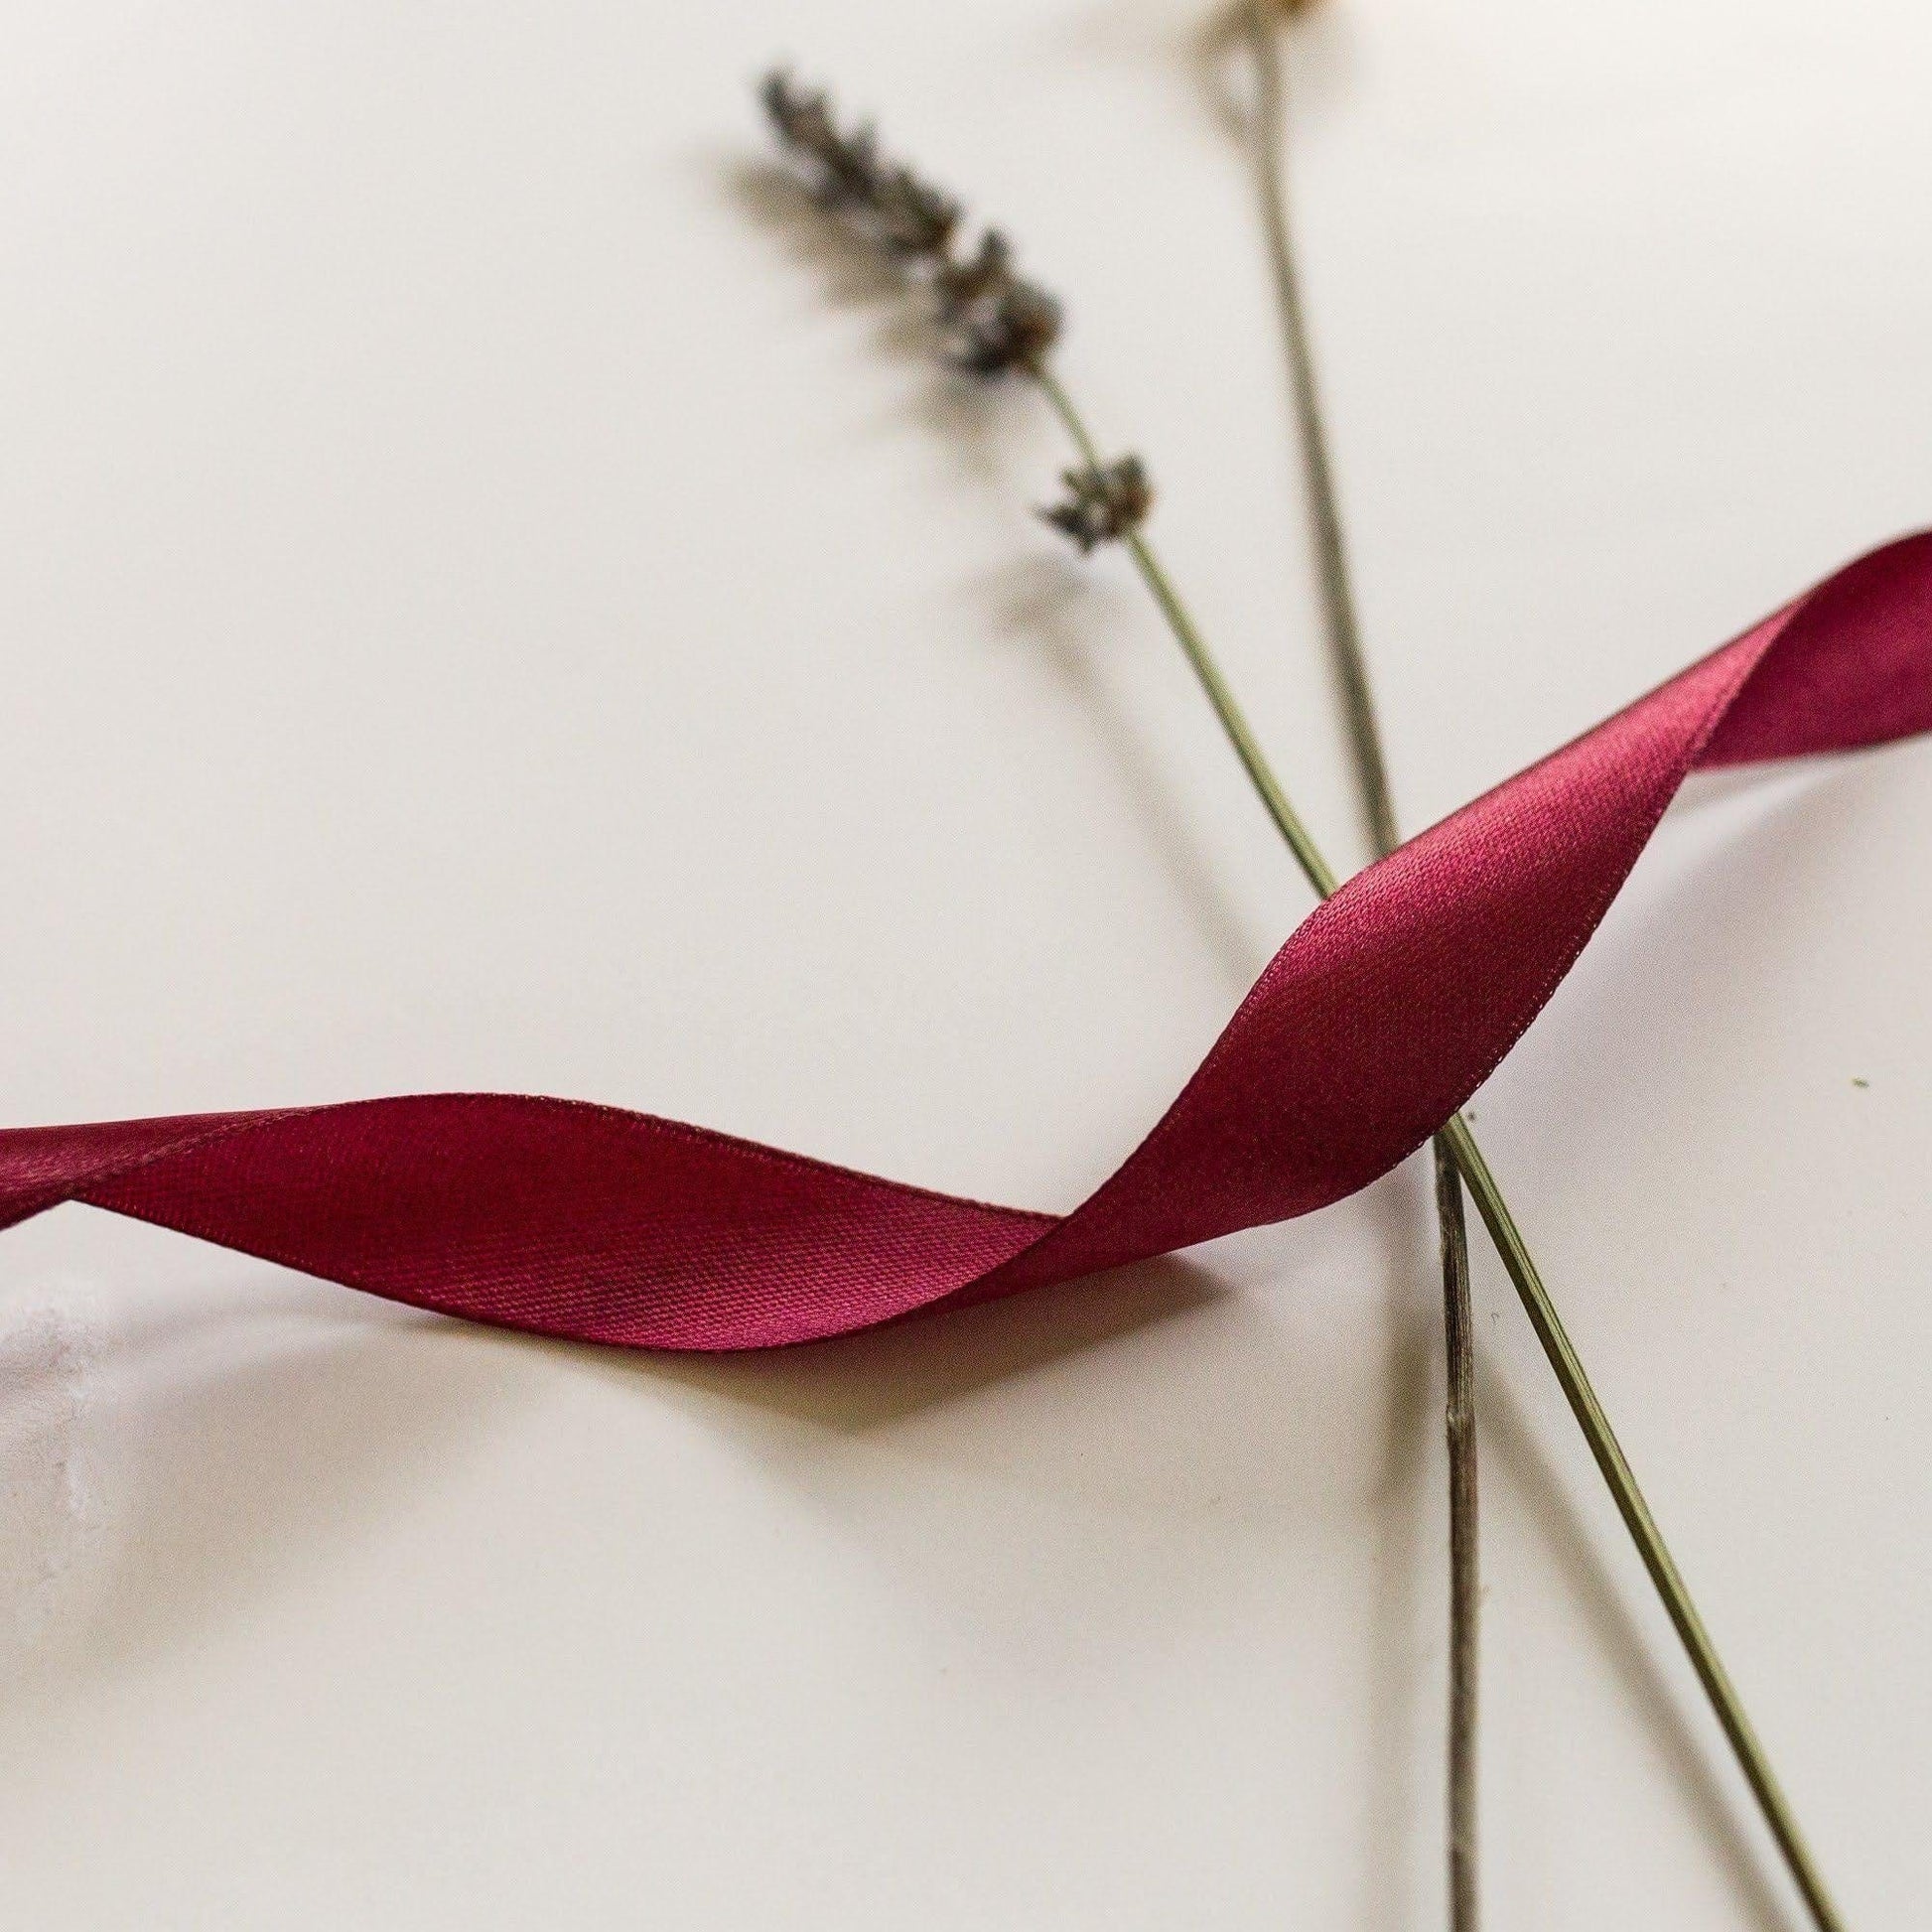 And Hope Designs Ribbon Wine red Satin ribbon spools